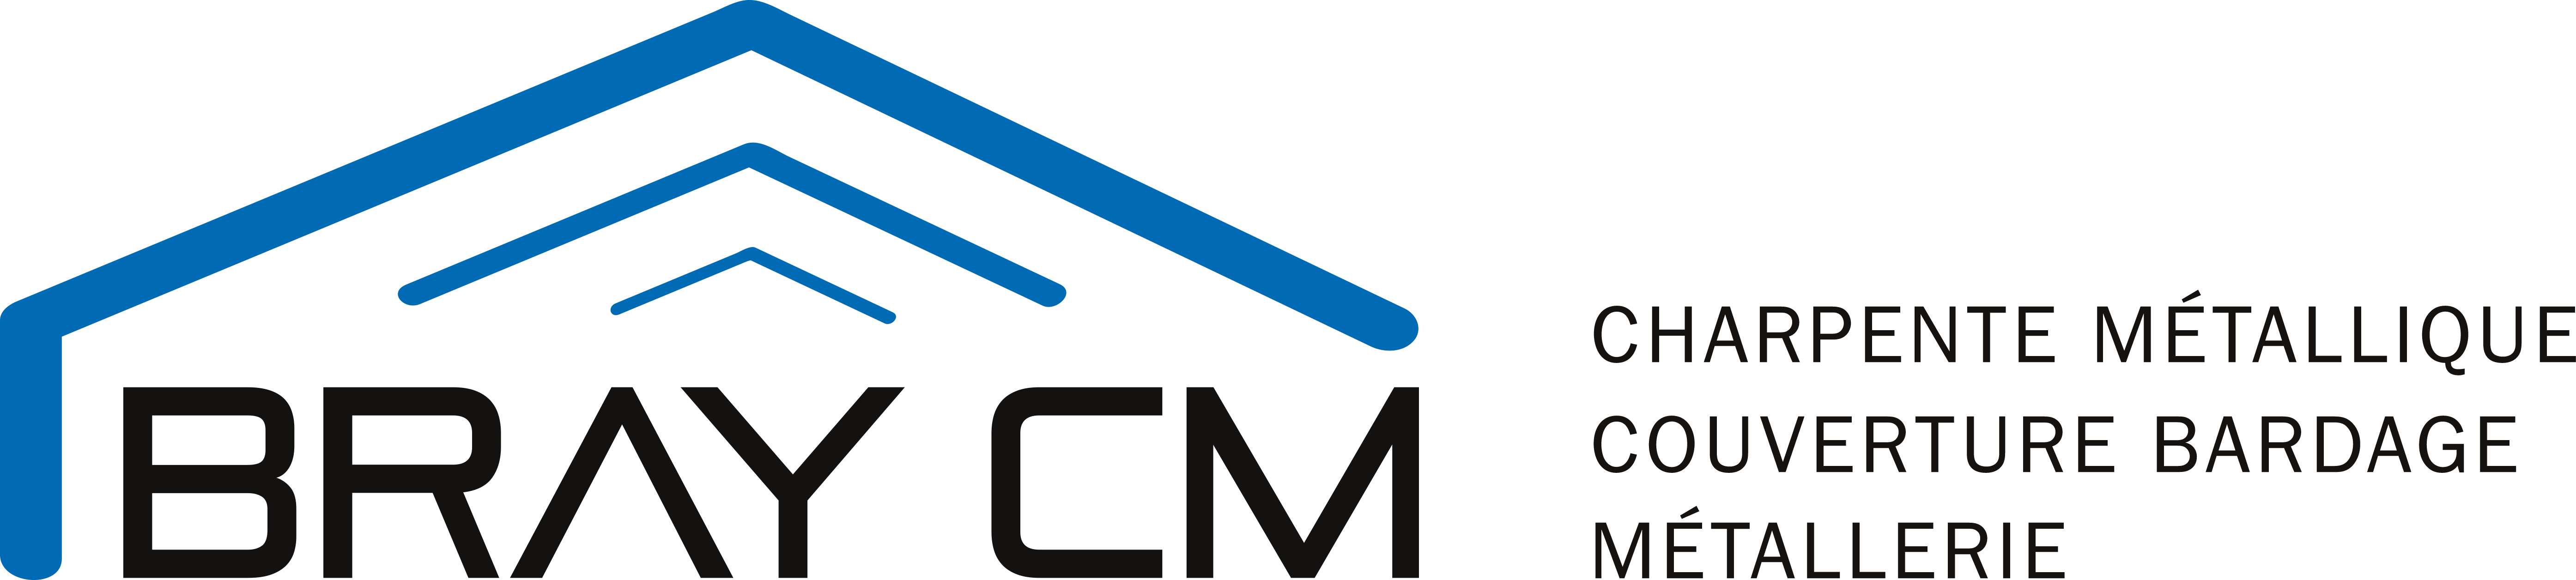 logo-bray-CM-2015-site